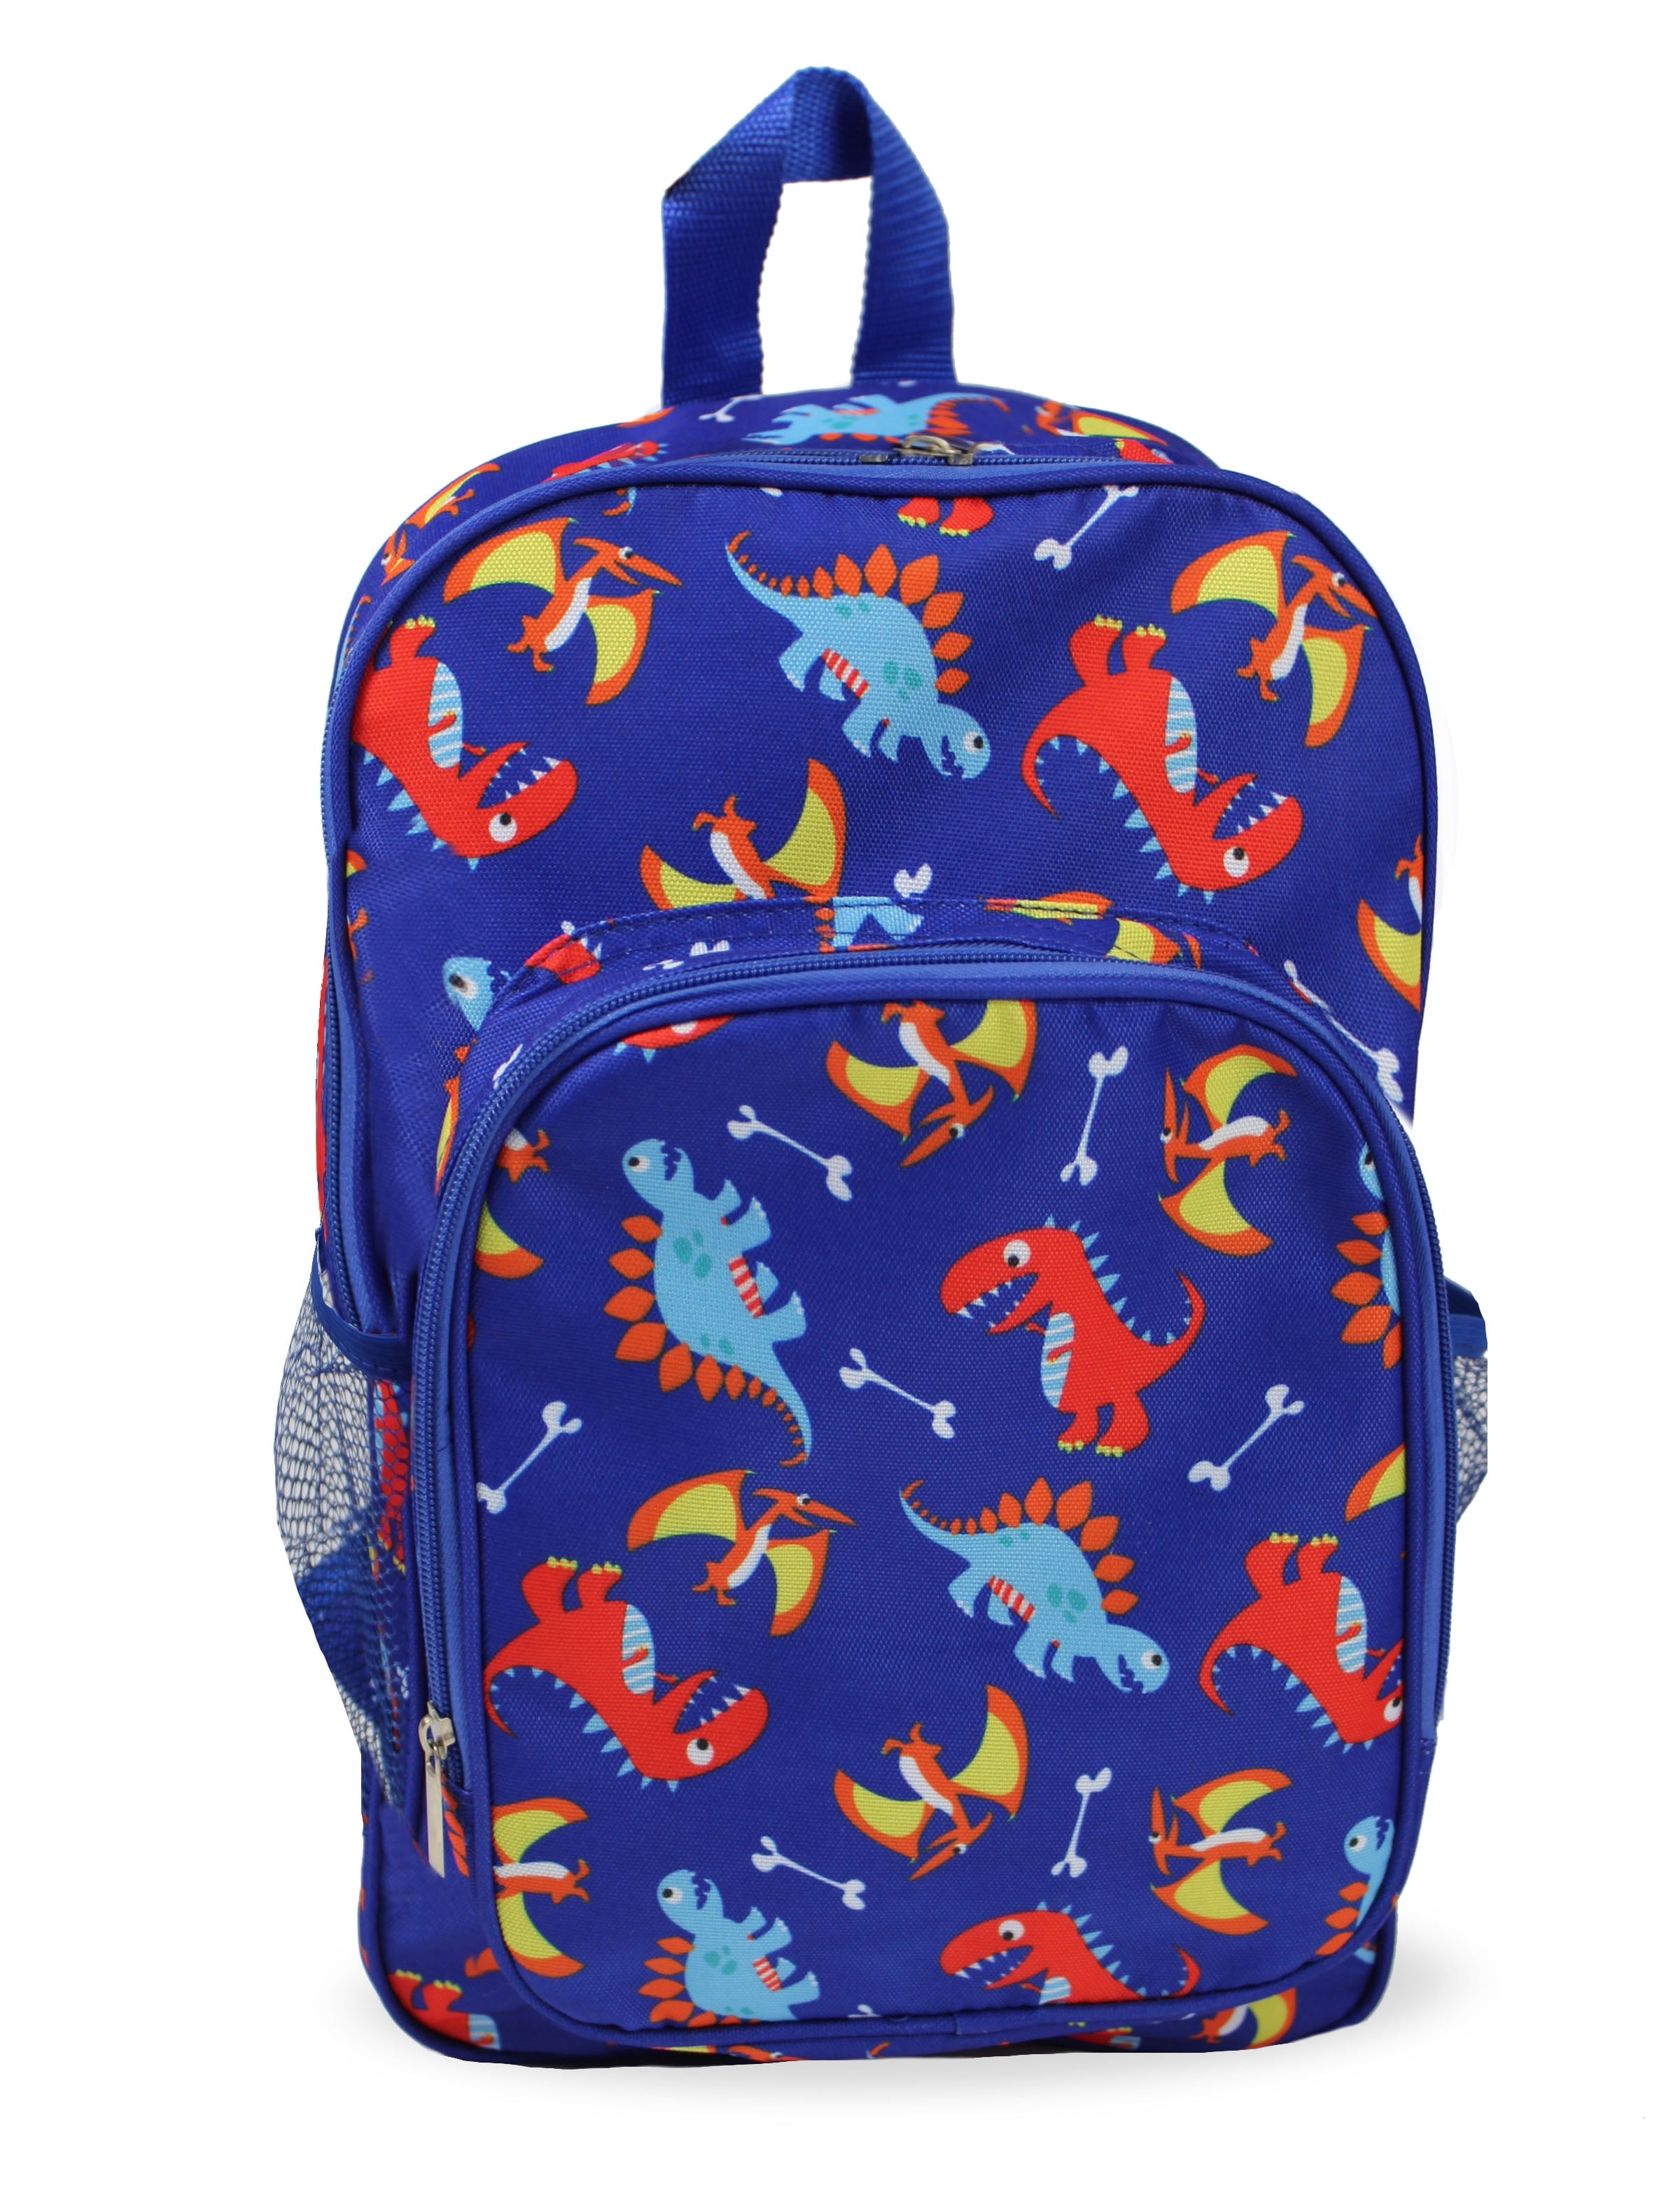 13-16"Jurassic World Movie Dinosaur Park Backpack School Book Bag Kids Rucksack